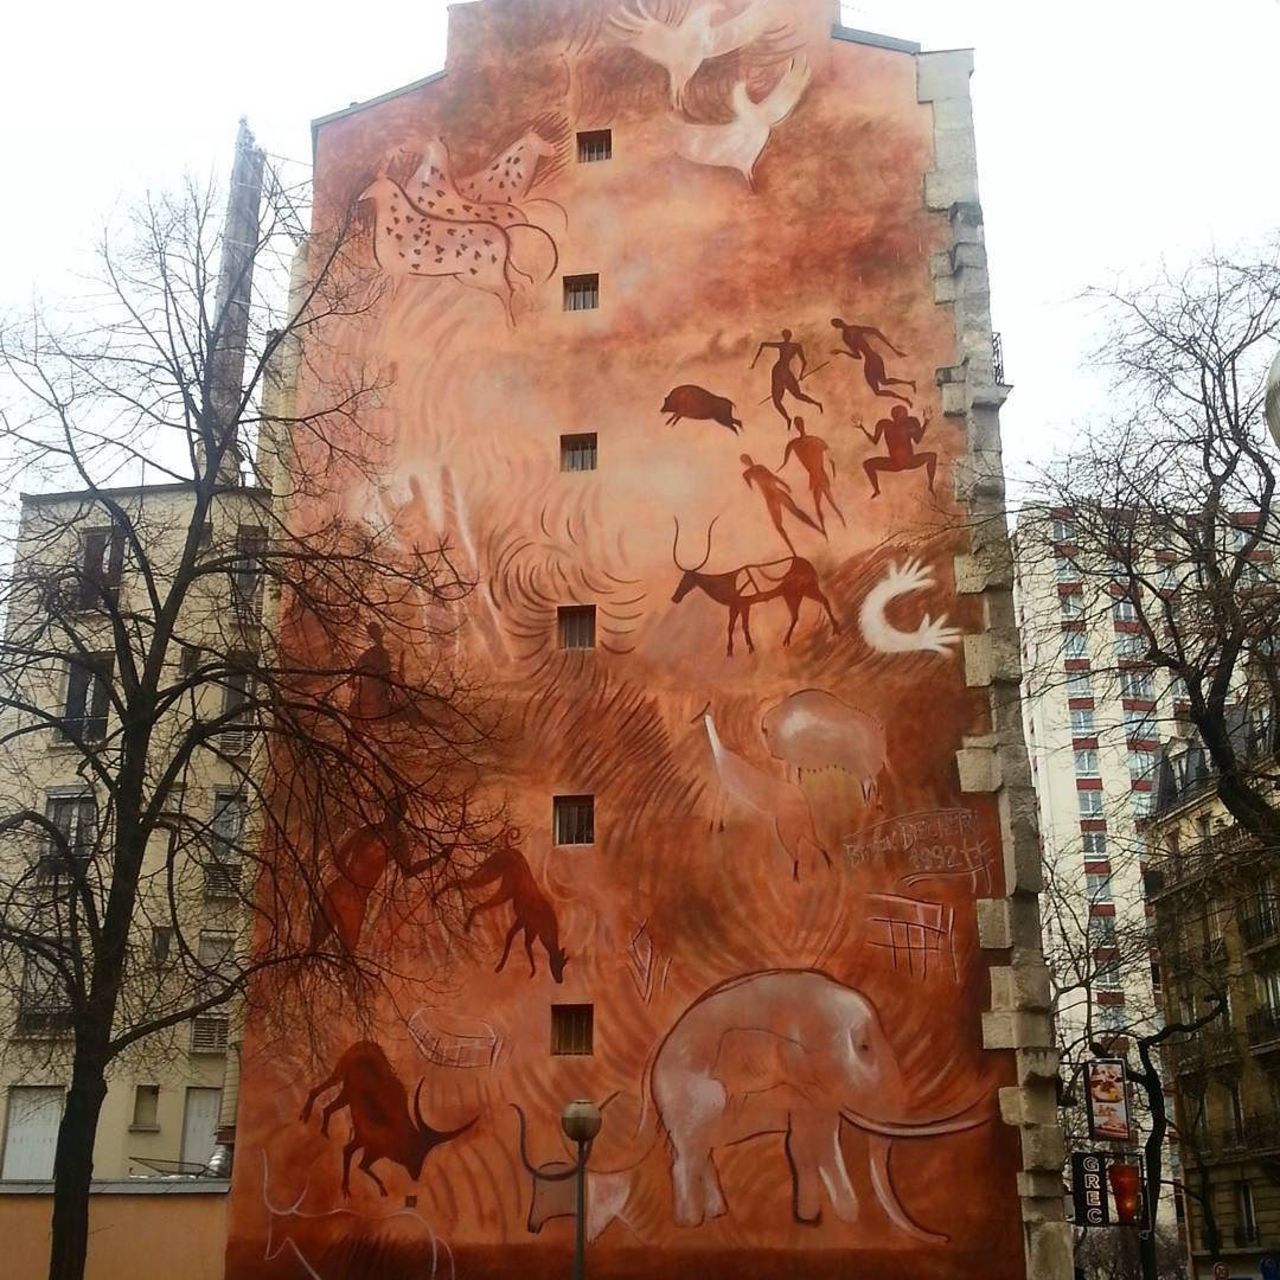 #Paris #graffiti photo by @fotoflaneuse http://ift.tt/1GkIDT9 #StreetArt https://t.co/vjDB8pj5vs